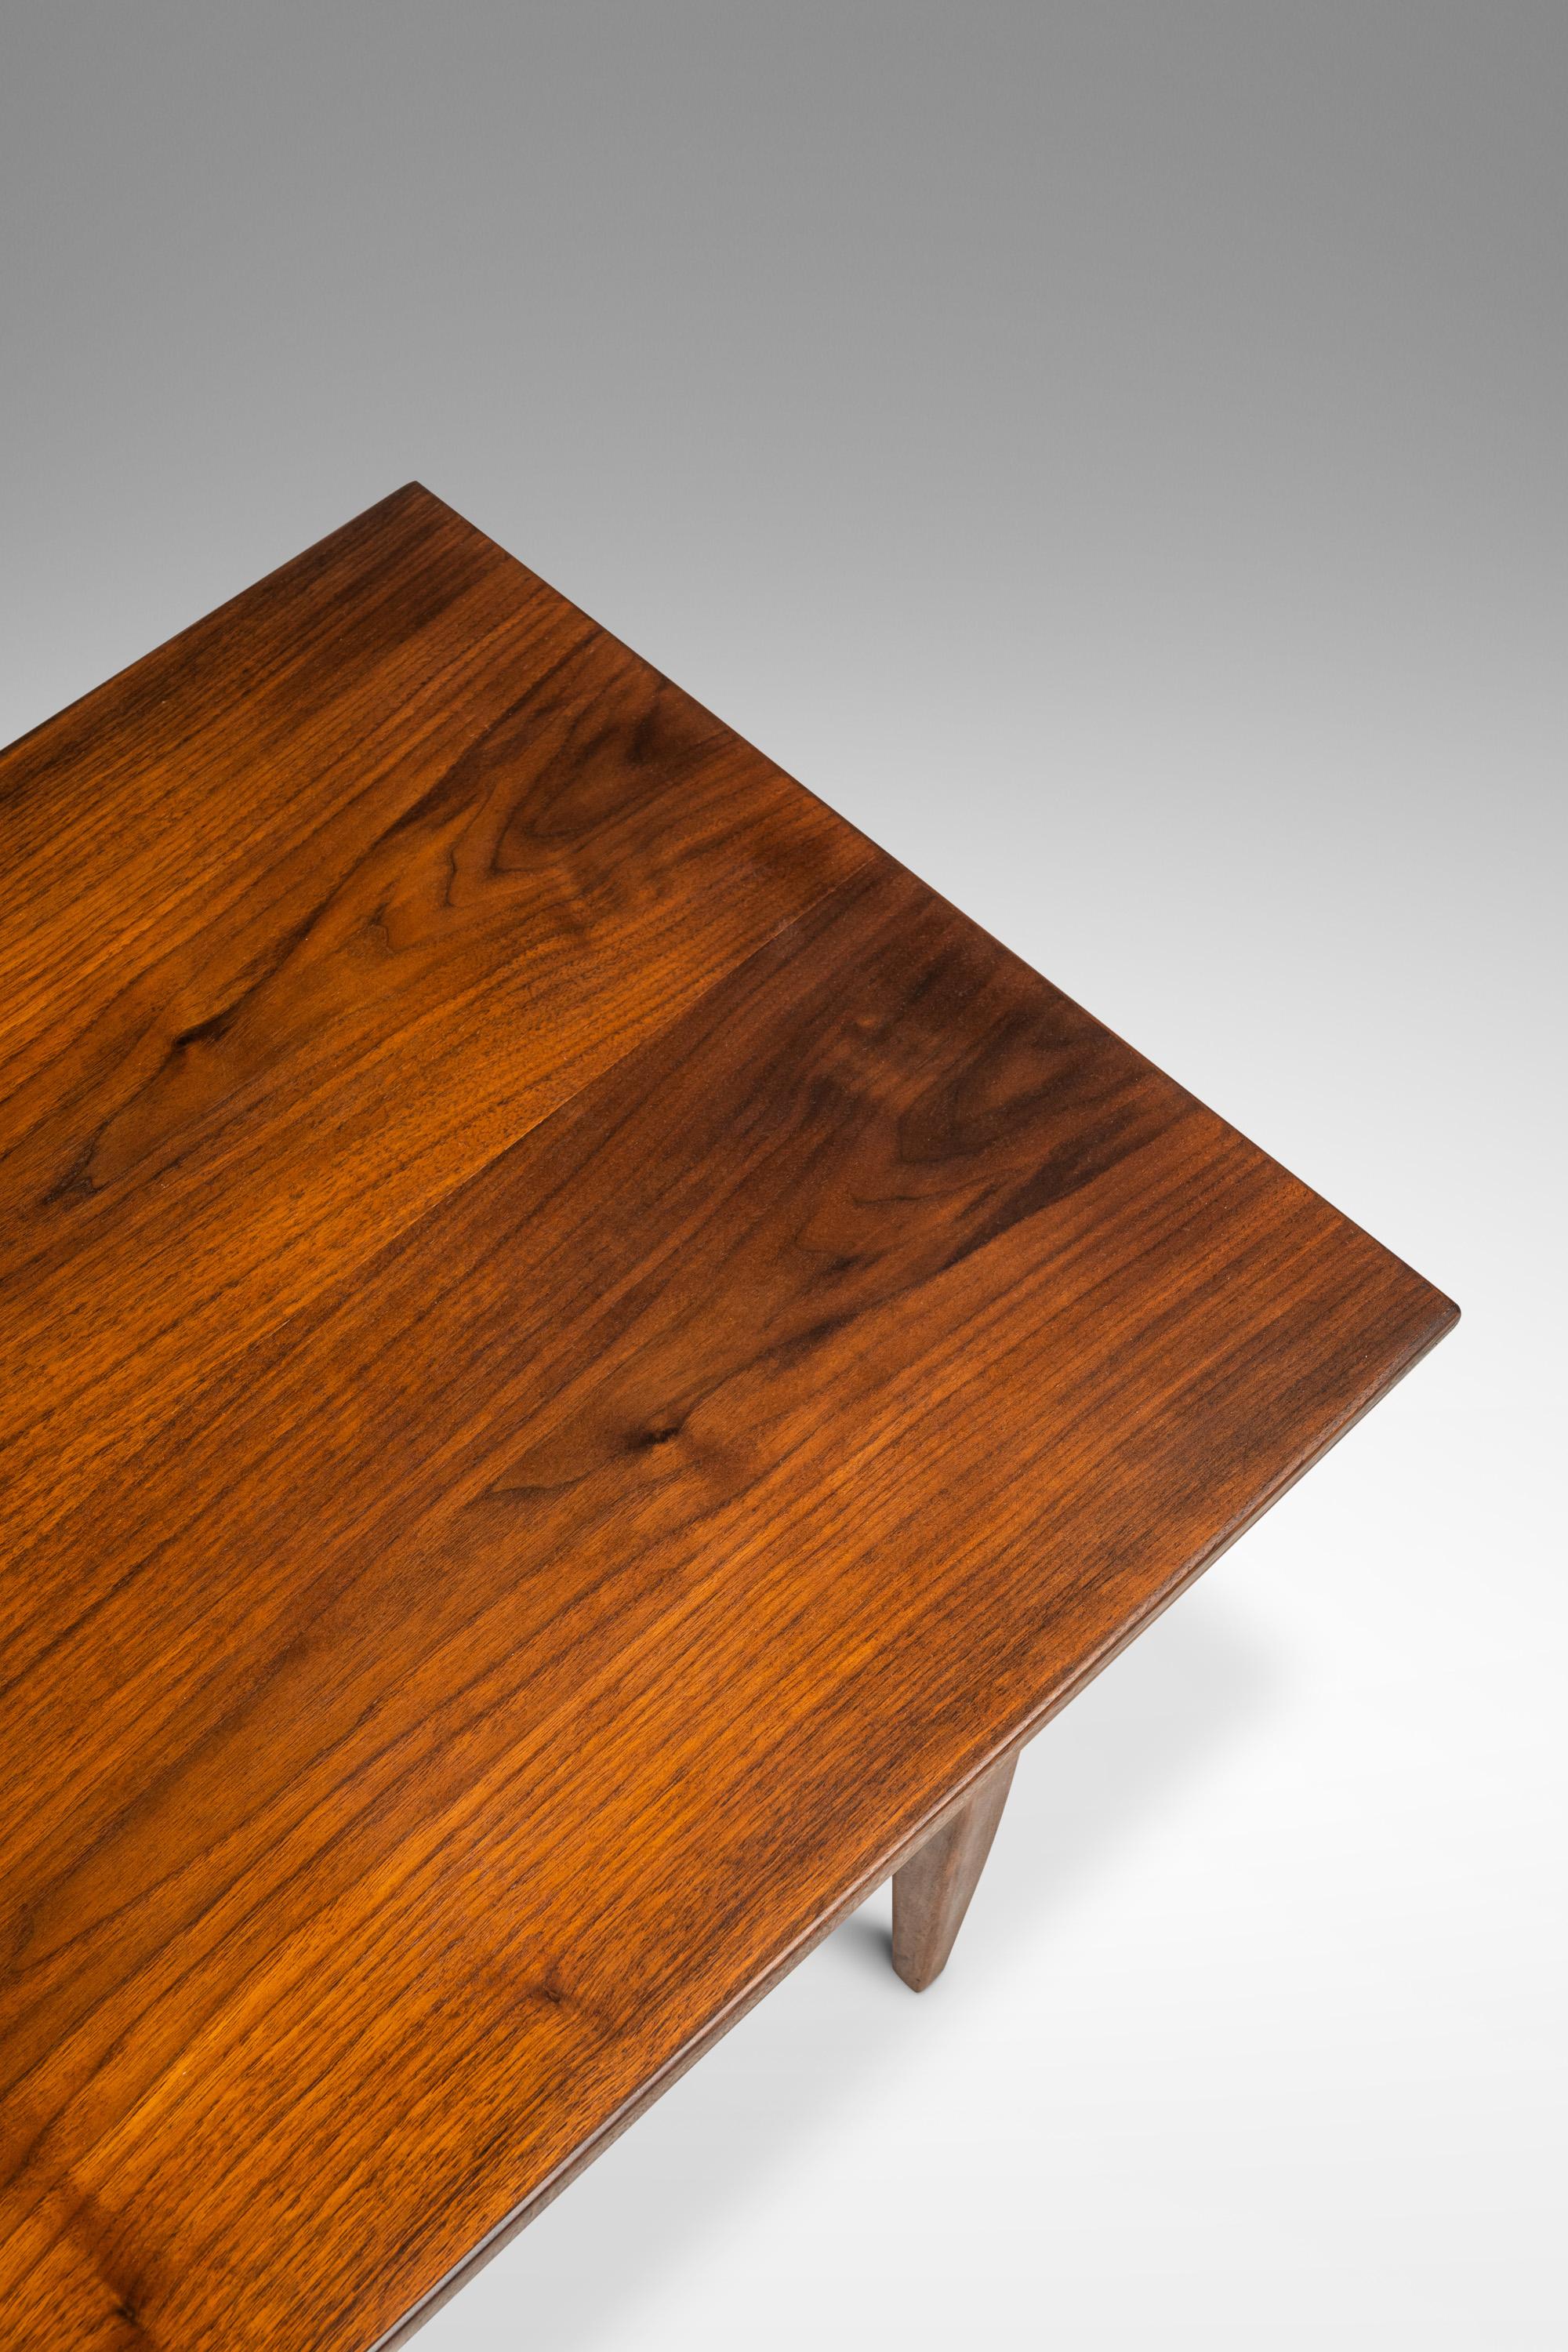 Mid-Century Modern Angular Coffee Table in Walnut, c. 1960's For Sale 3